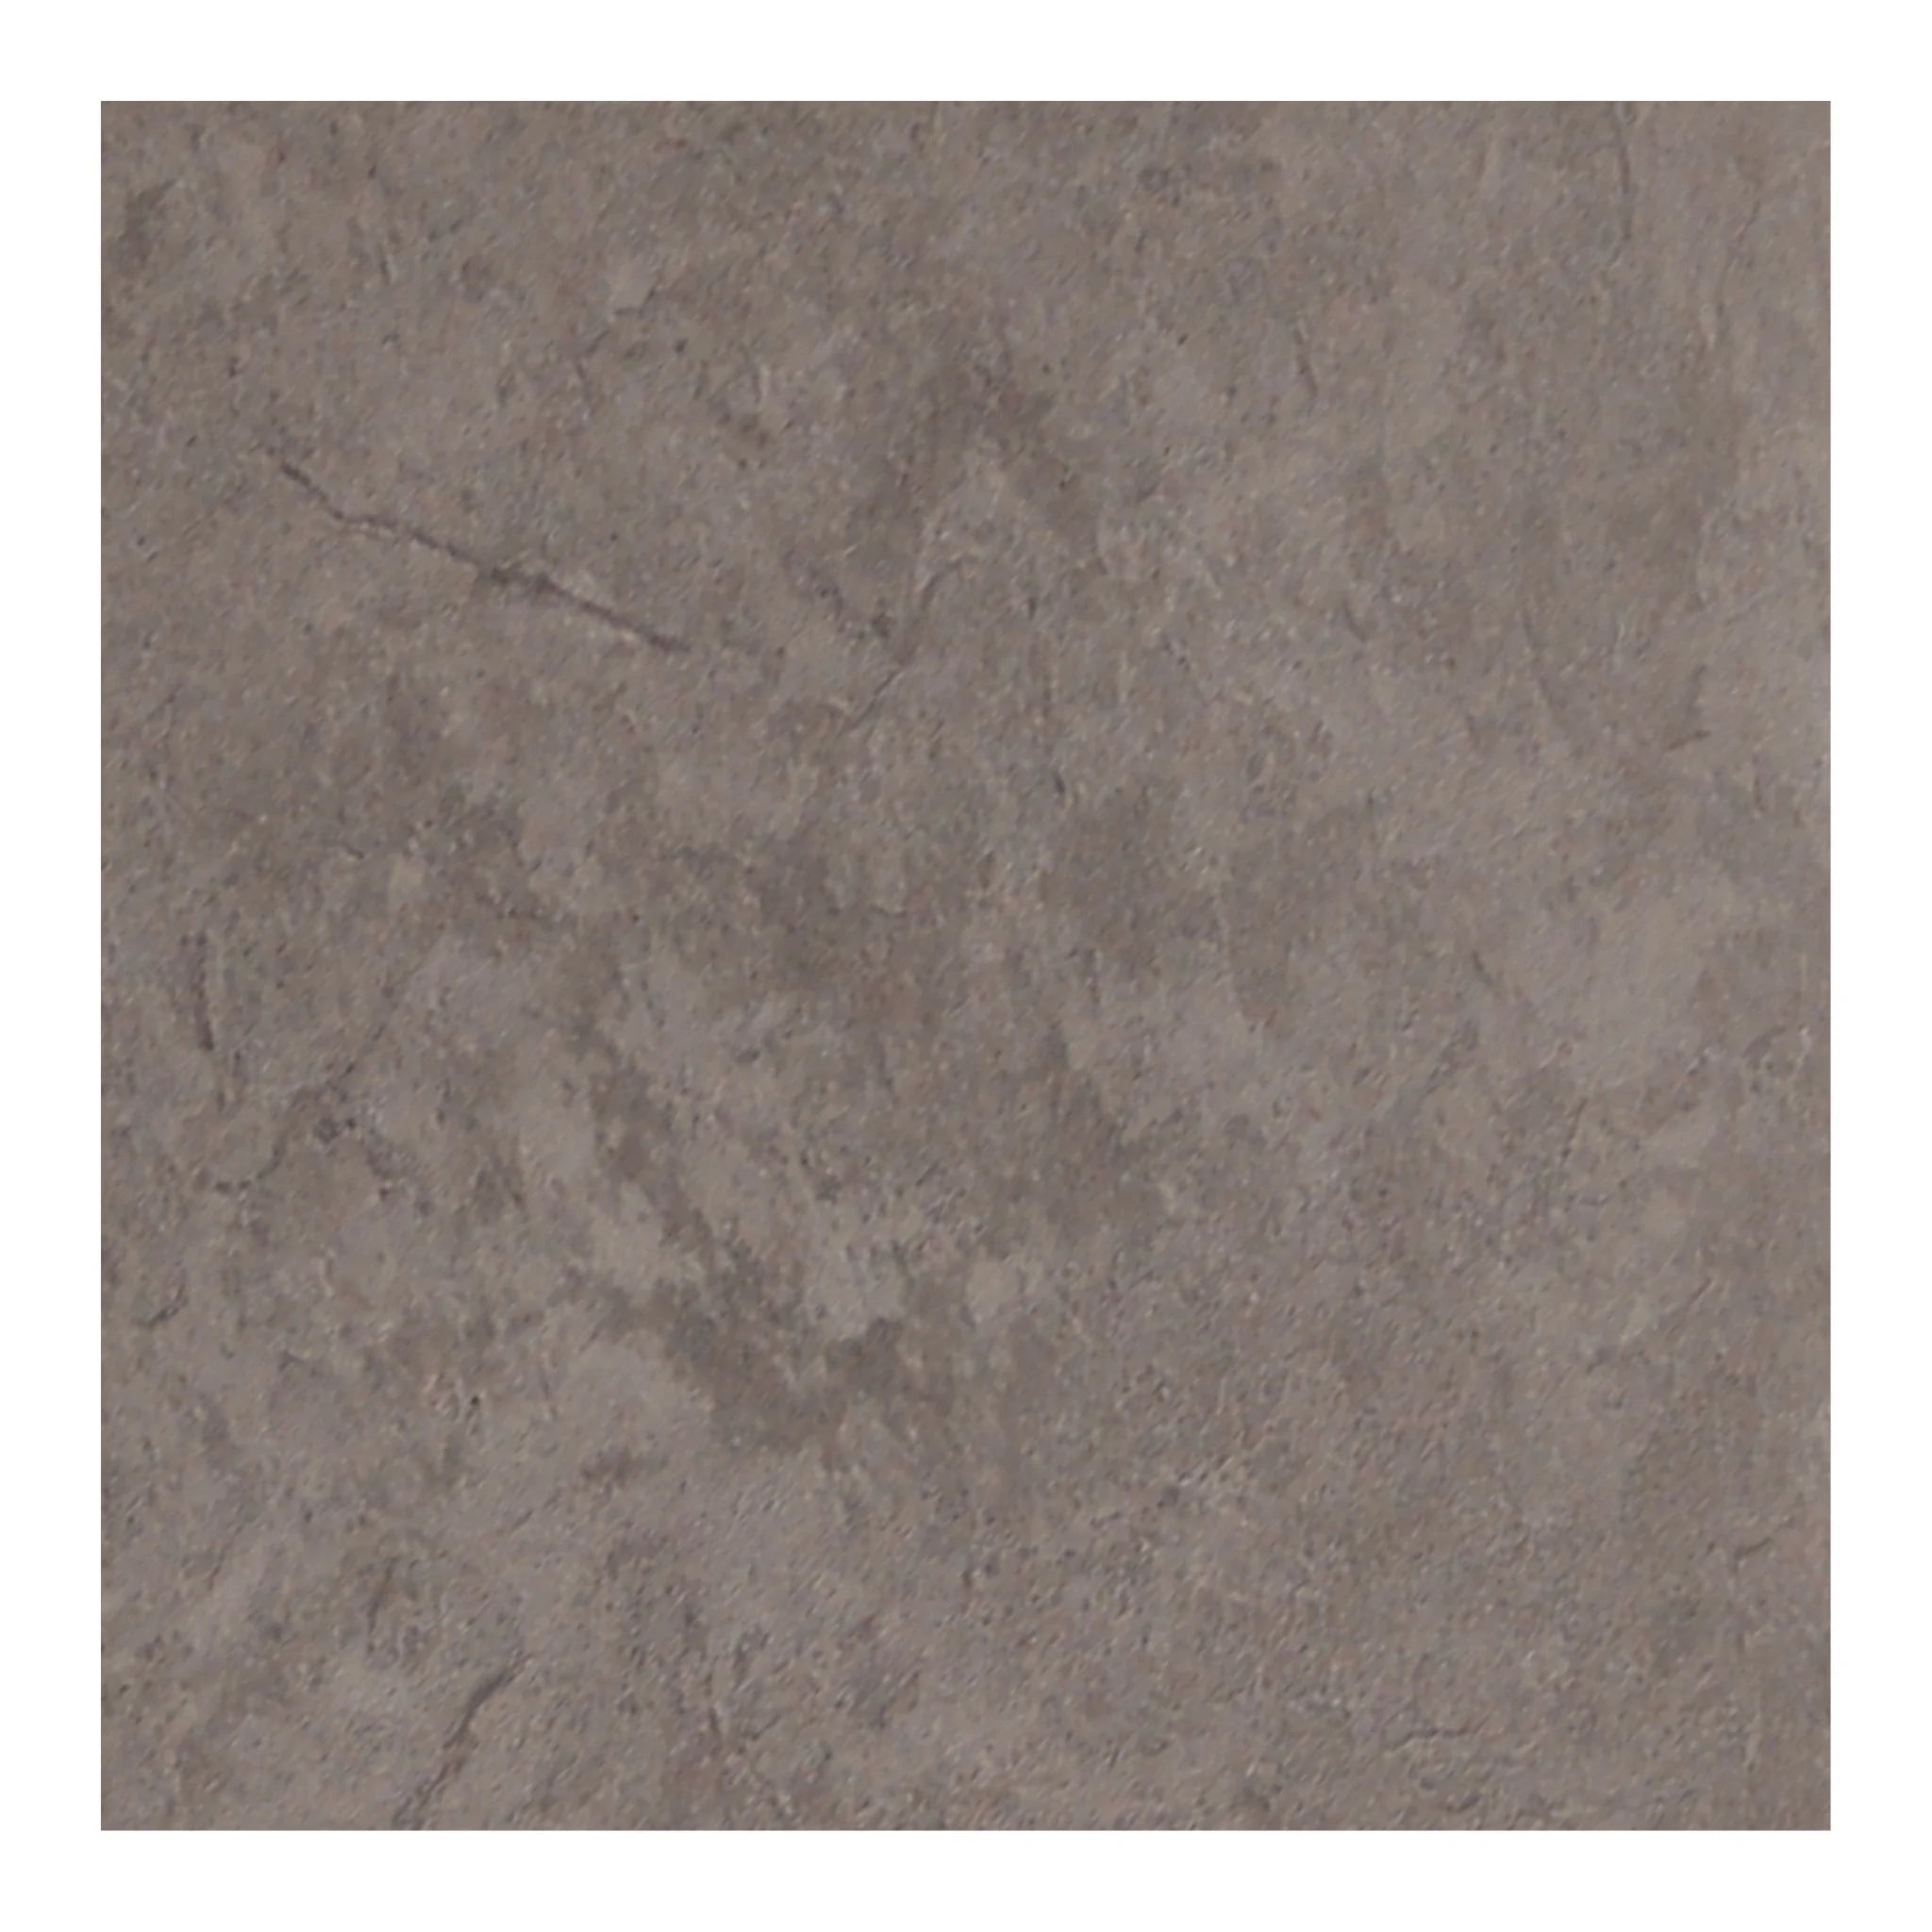 single tile-effect marble floor showcasing dark grey with dark edges